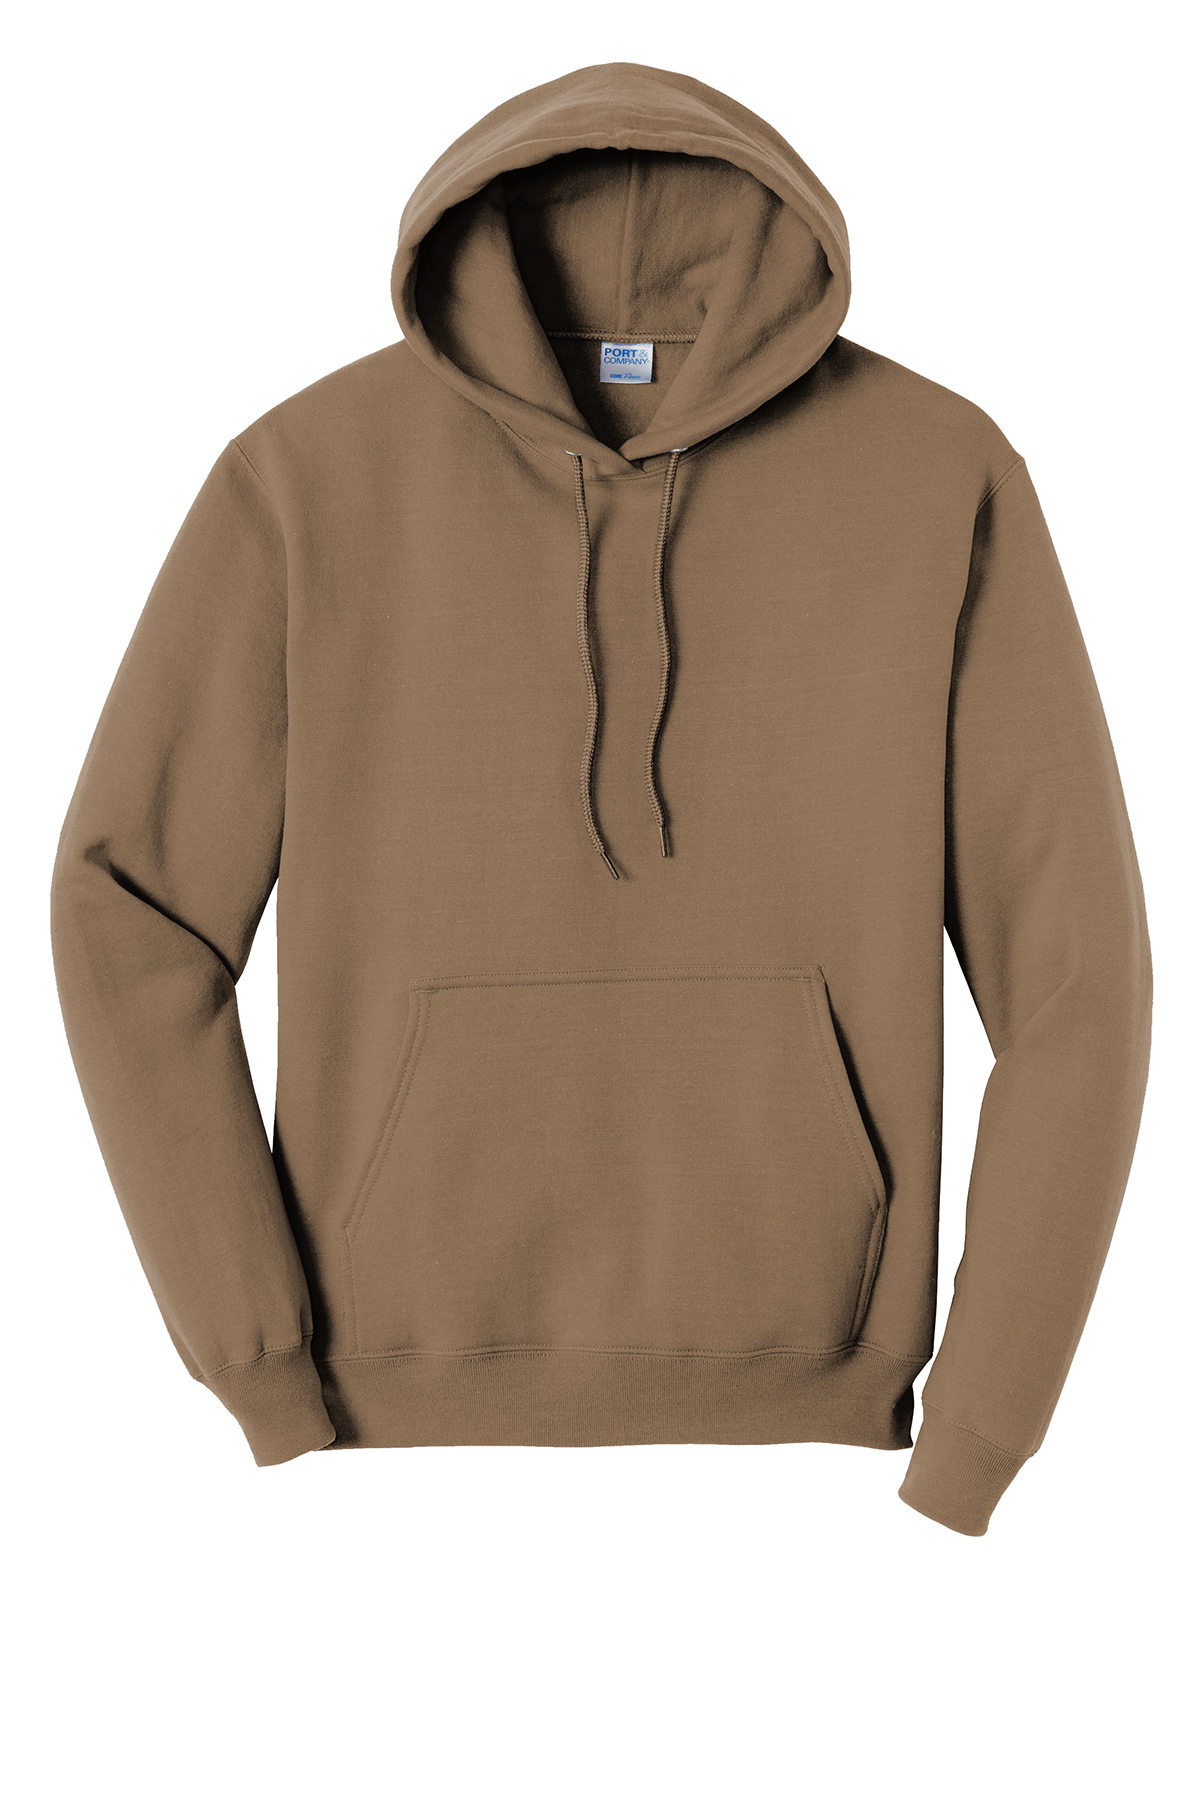 Port & Company Core Fleece Product Company Pullover Sweatshirt | Hooded & Port 